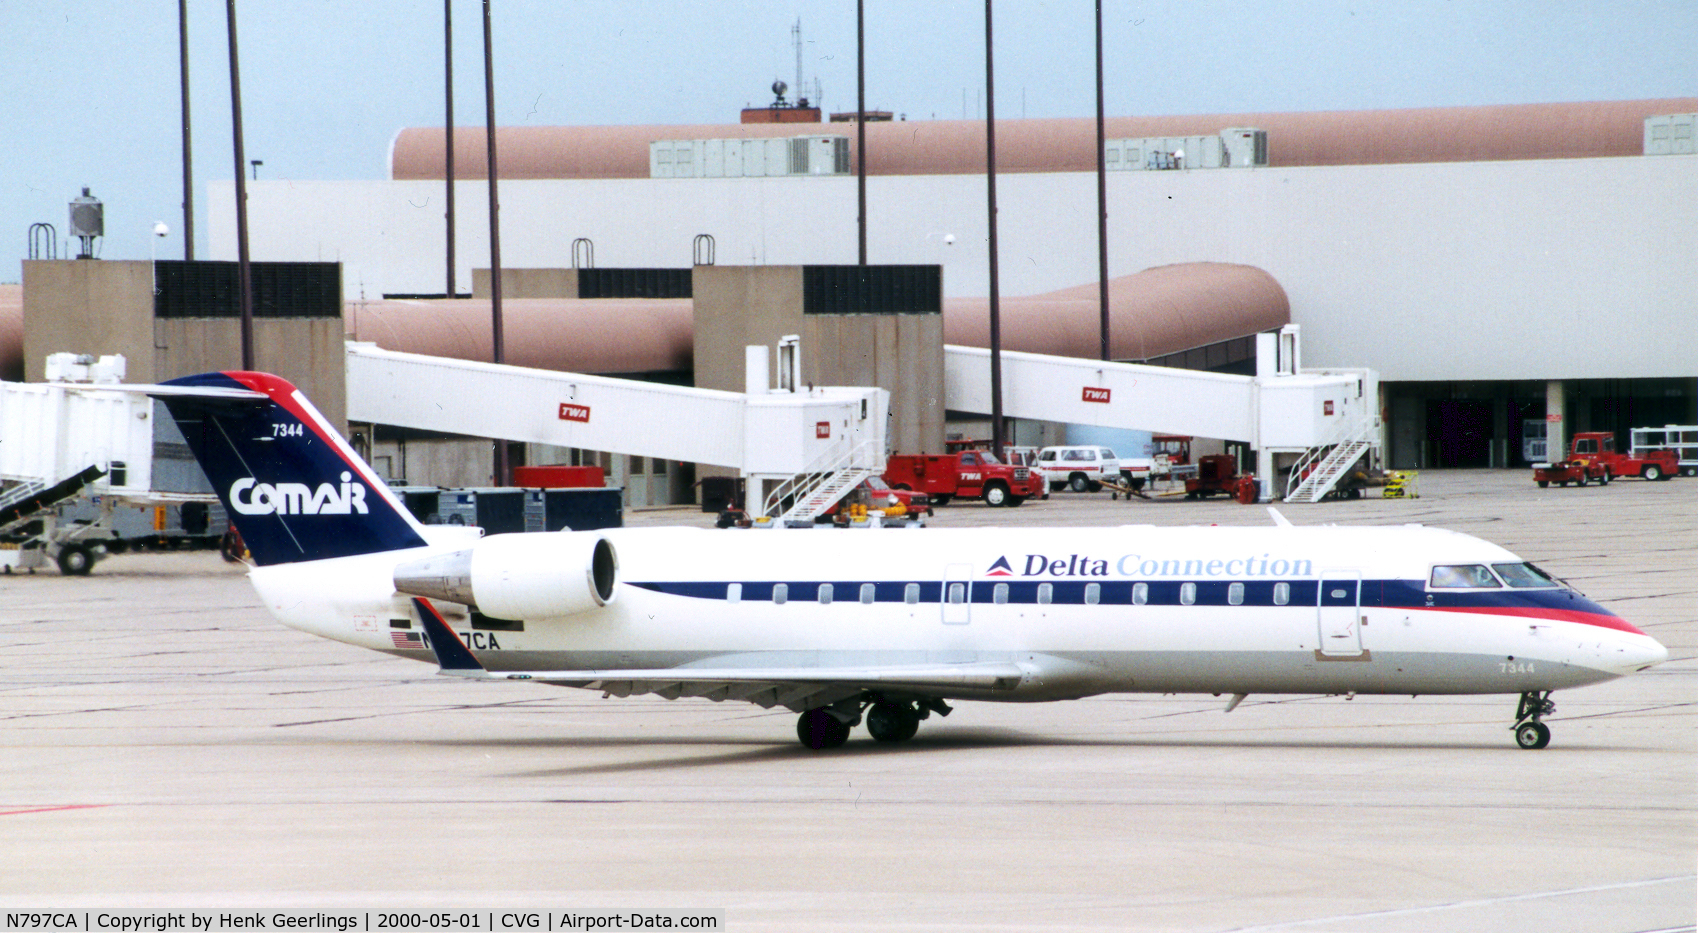 N797CA, 1999 Bombardier CRJ-100ER (CL-600-2B19) C/N 7344, Comair Delta Connection